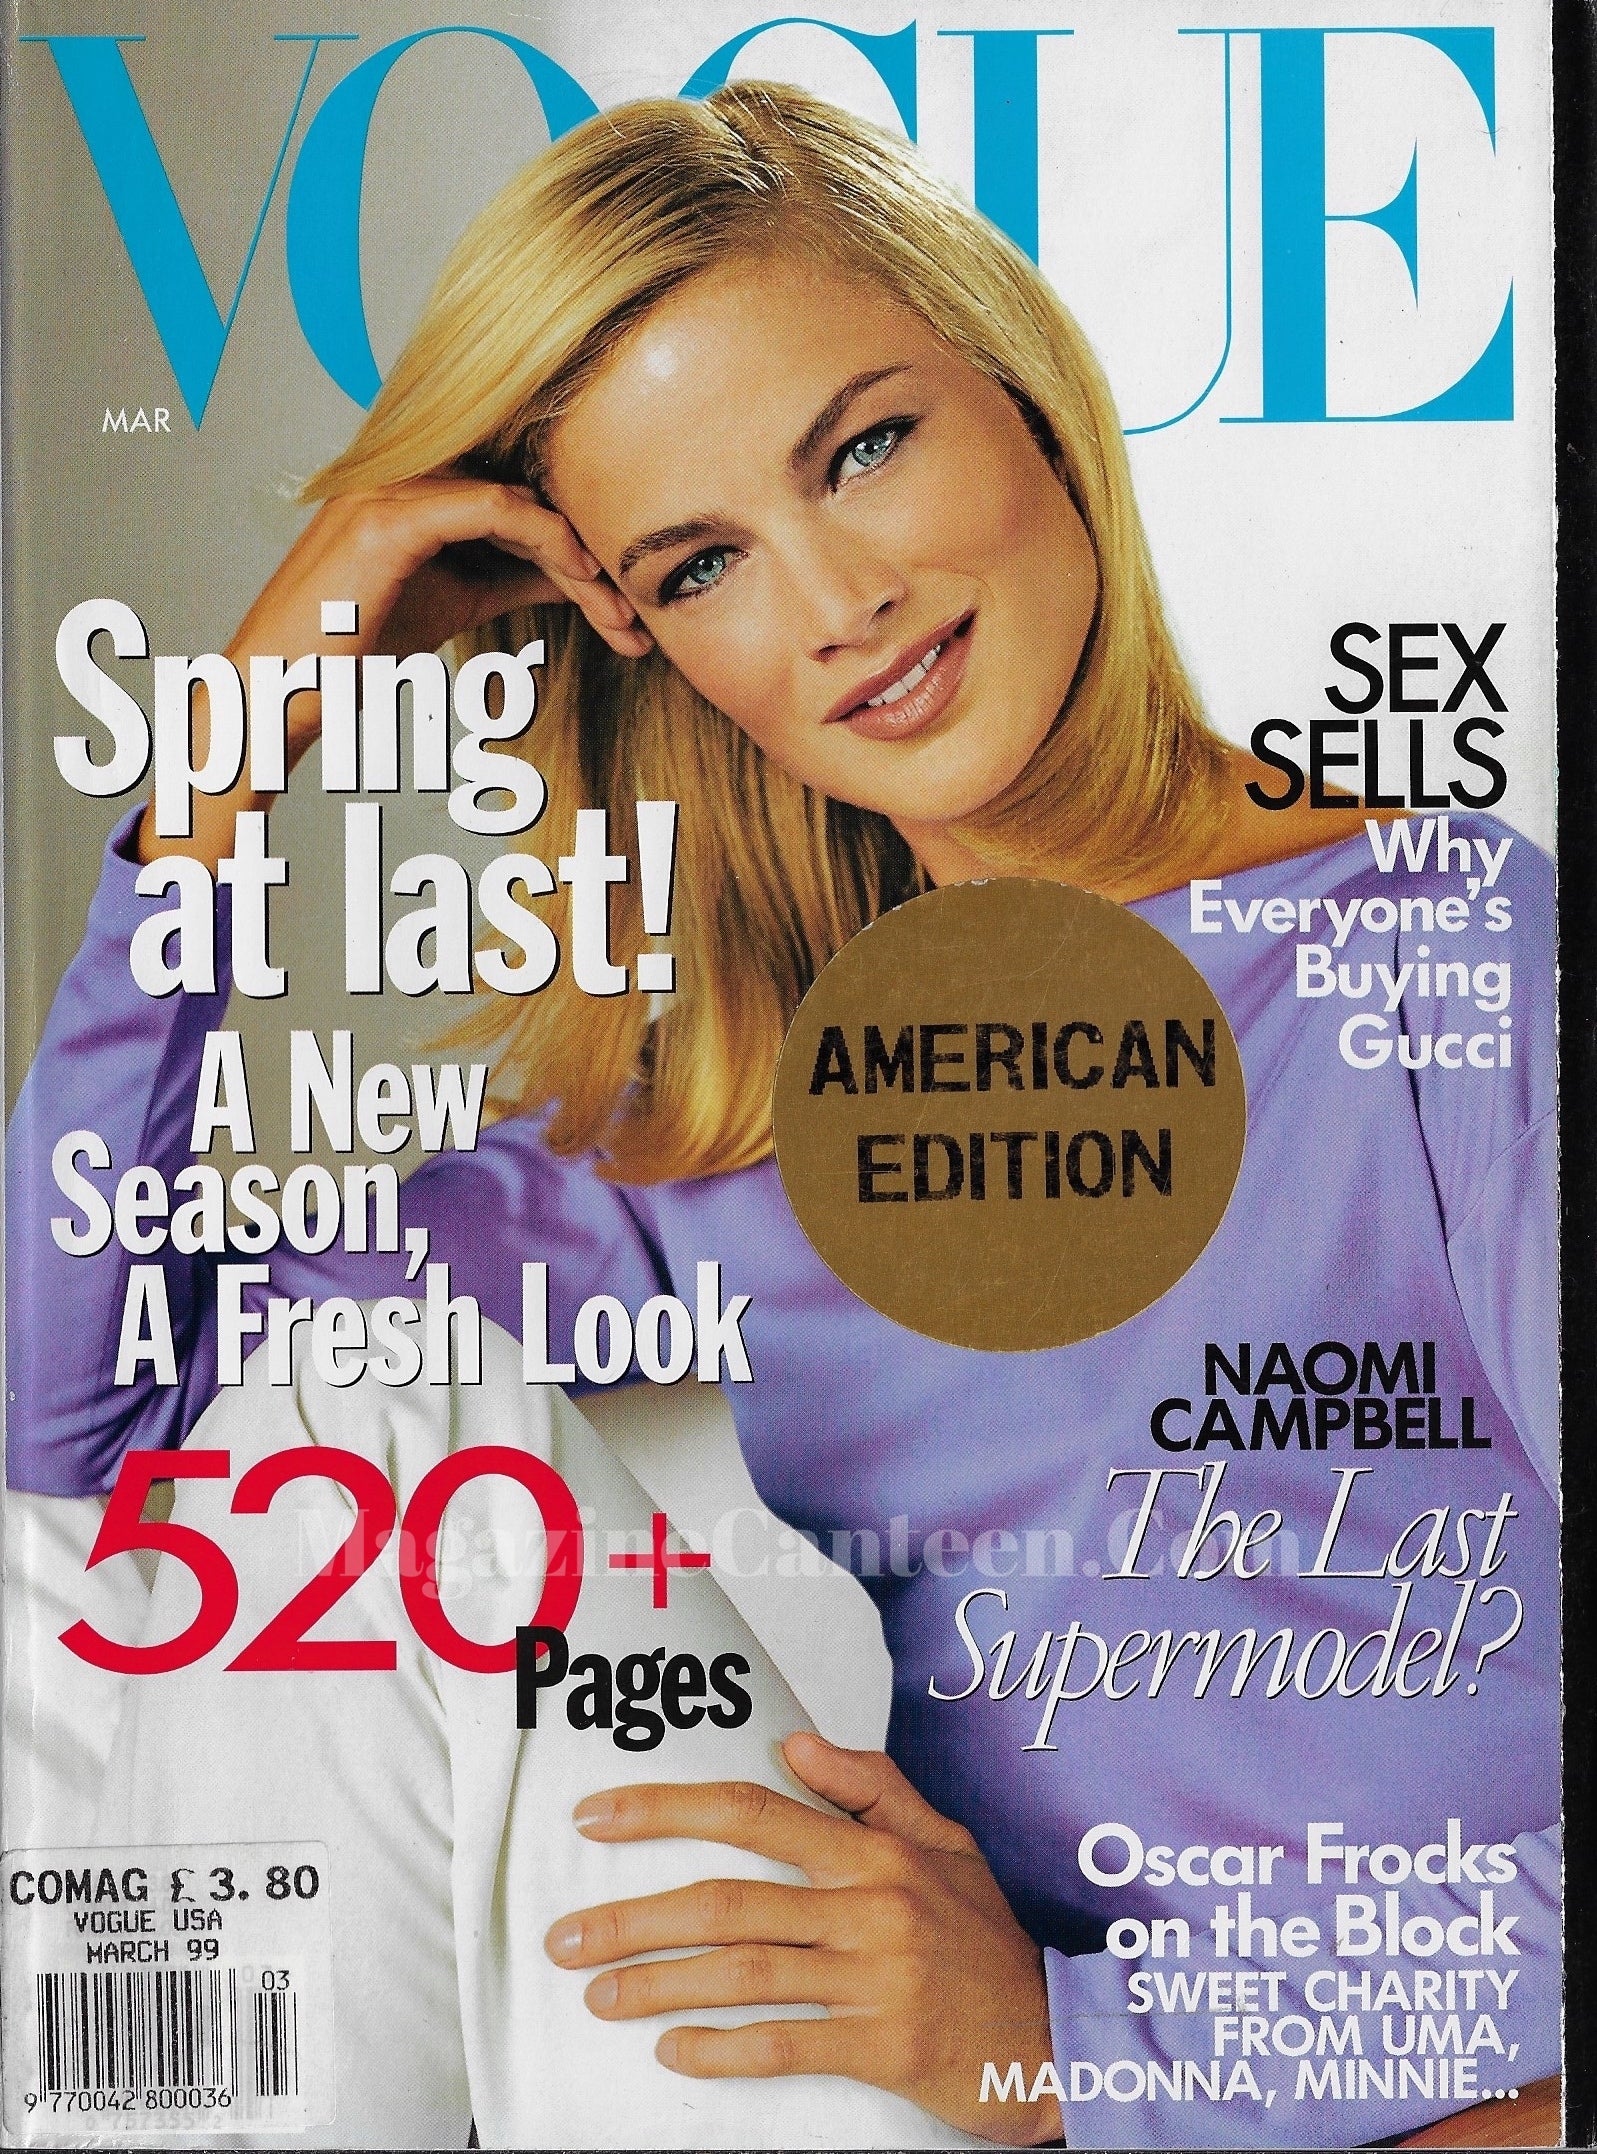 Vogue USA Magazine March 1999 - Carolyn Murphy